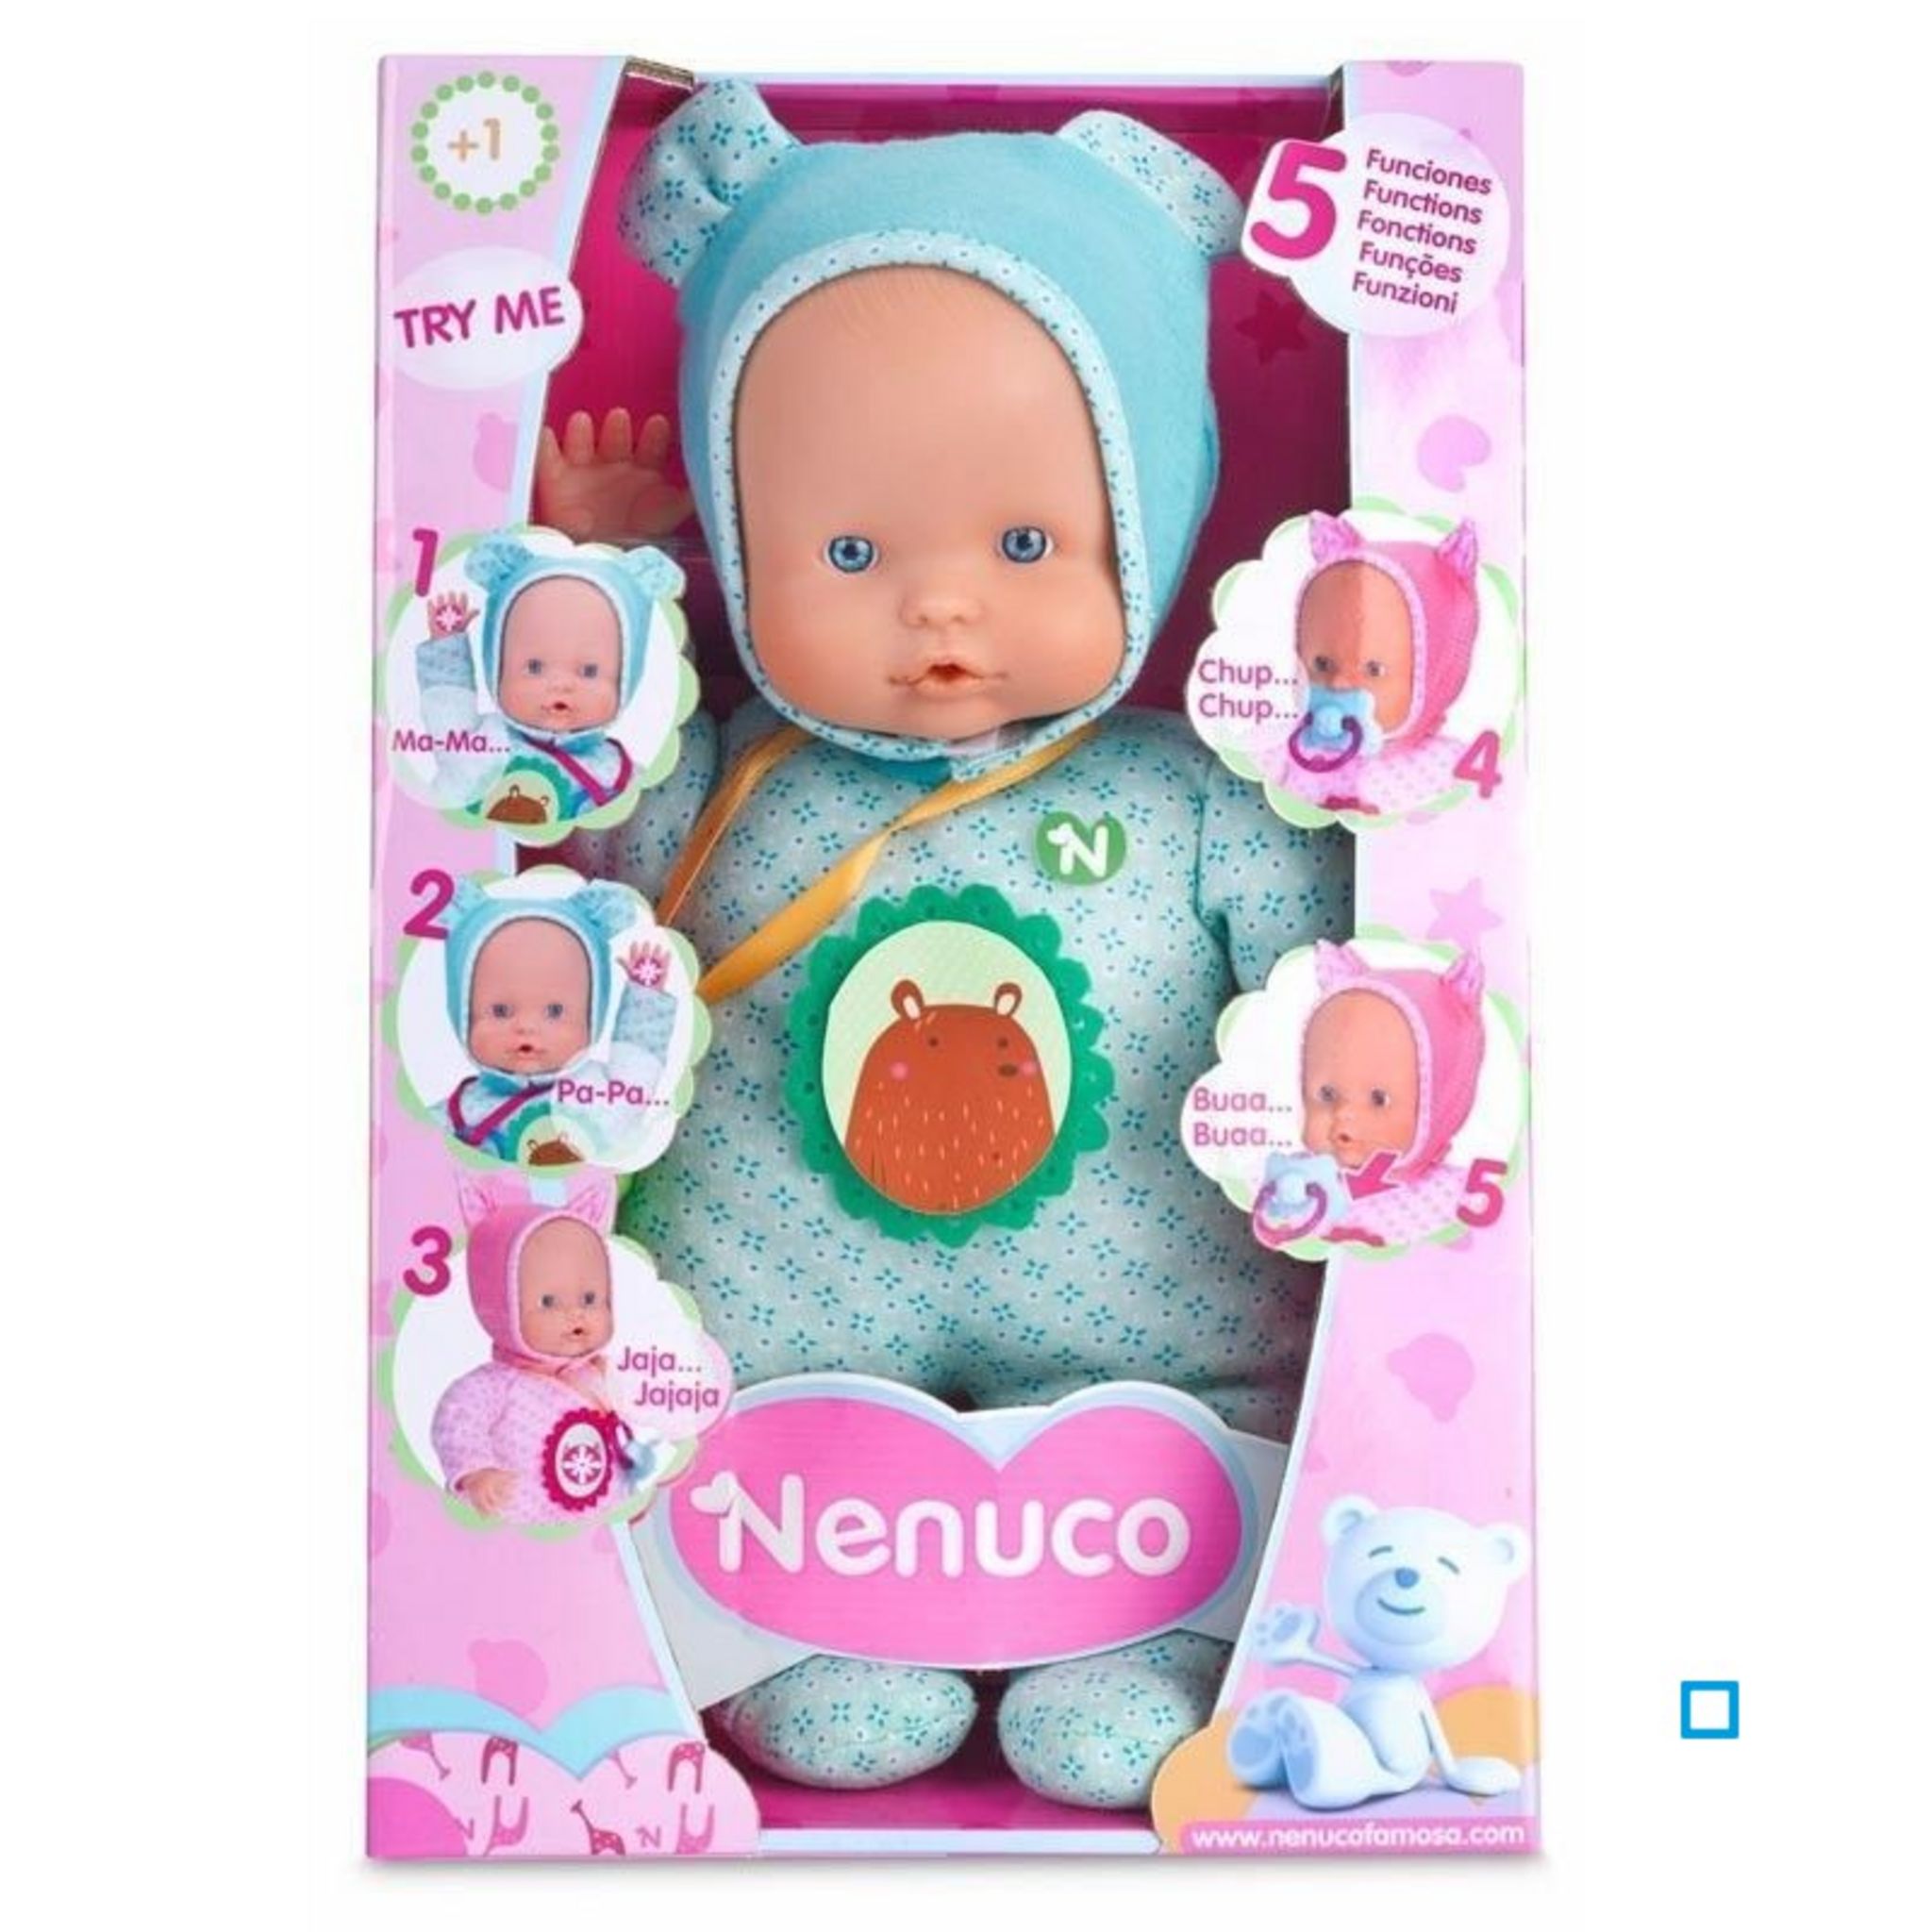 Promo Nenuco nenuco soigne et guérit chez Auchan